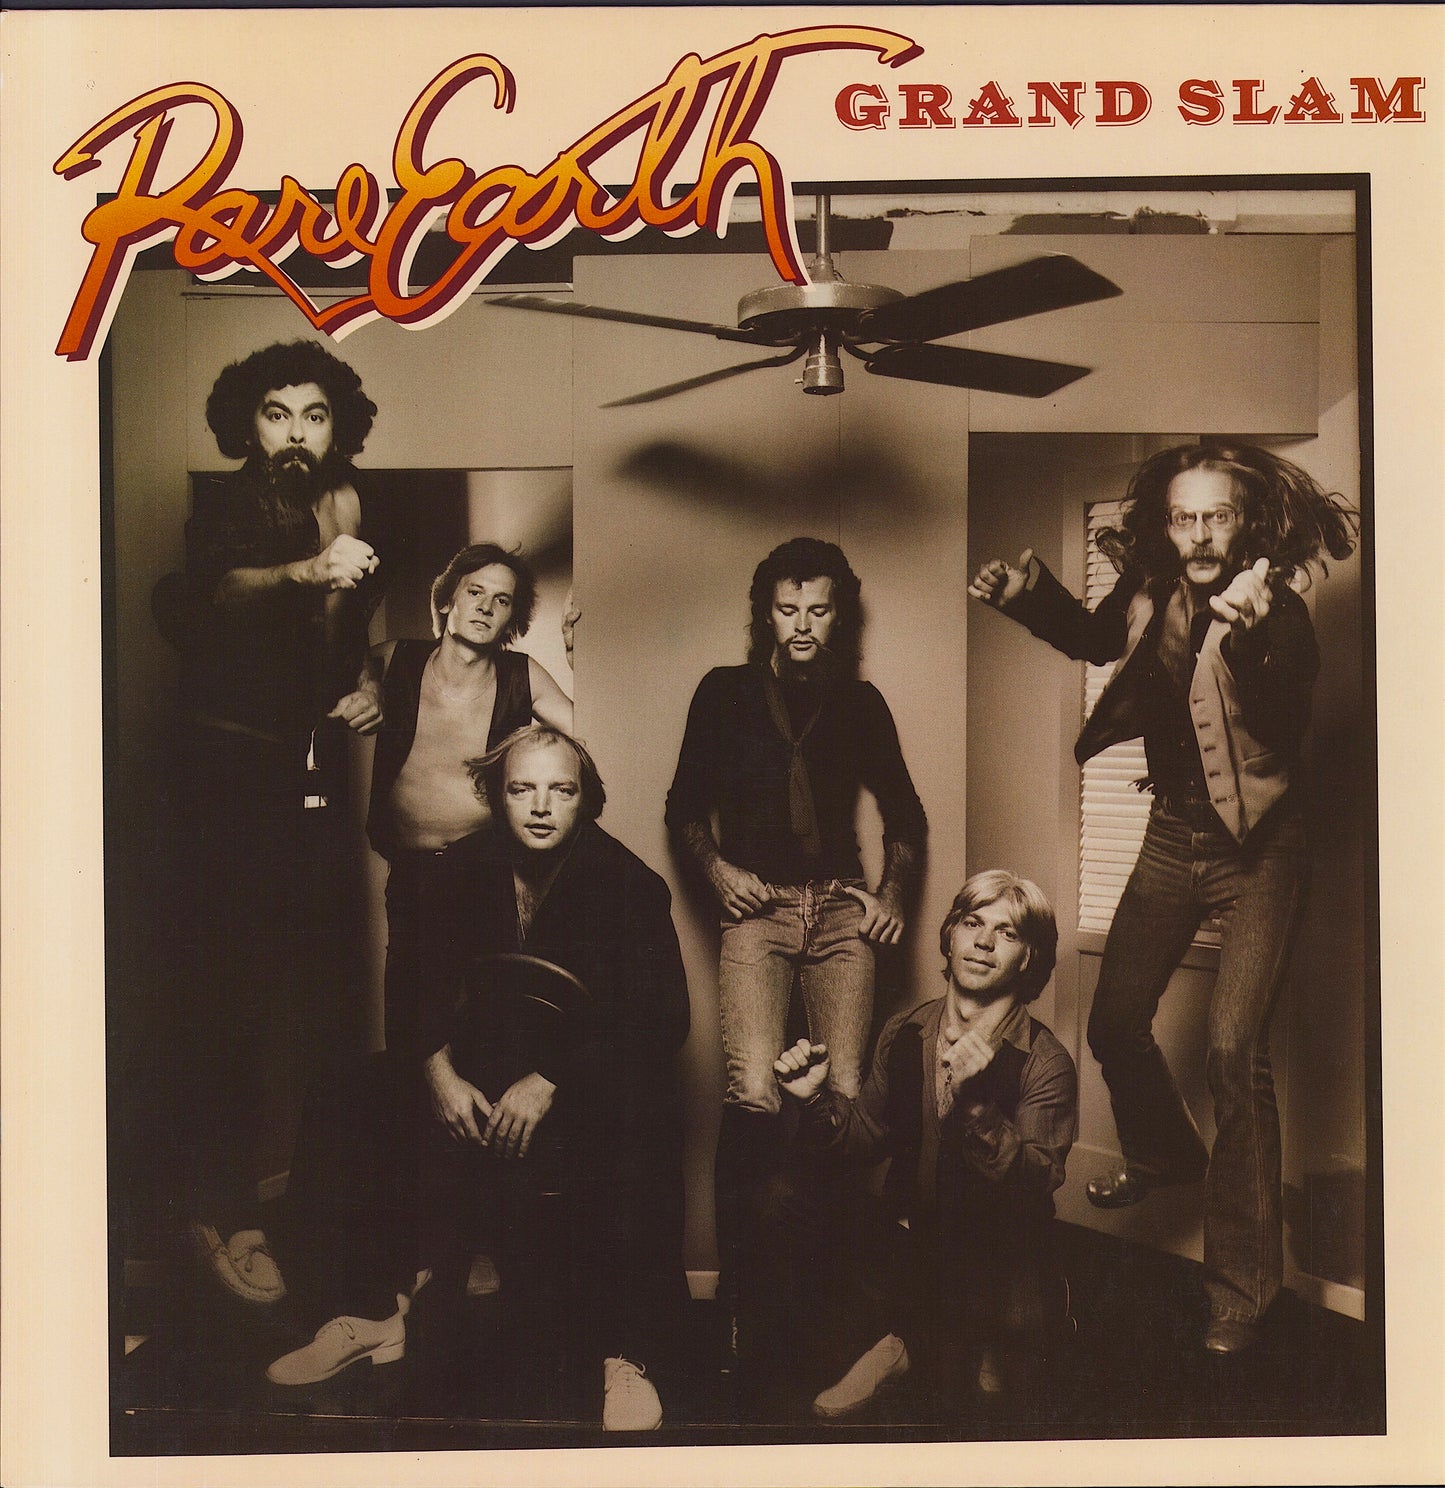 Rare Earth - Grand Slam Vinyl LP